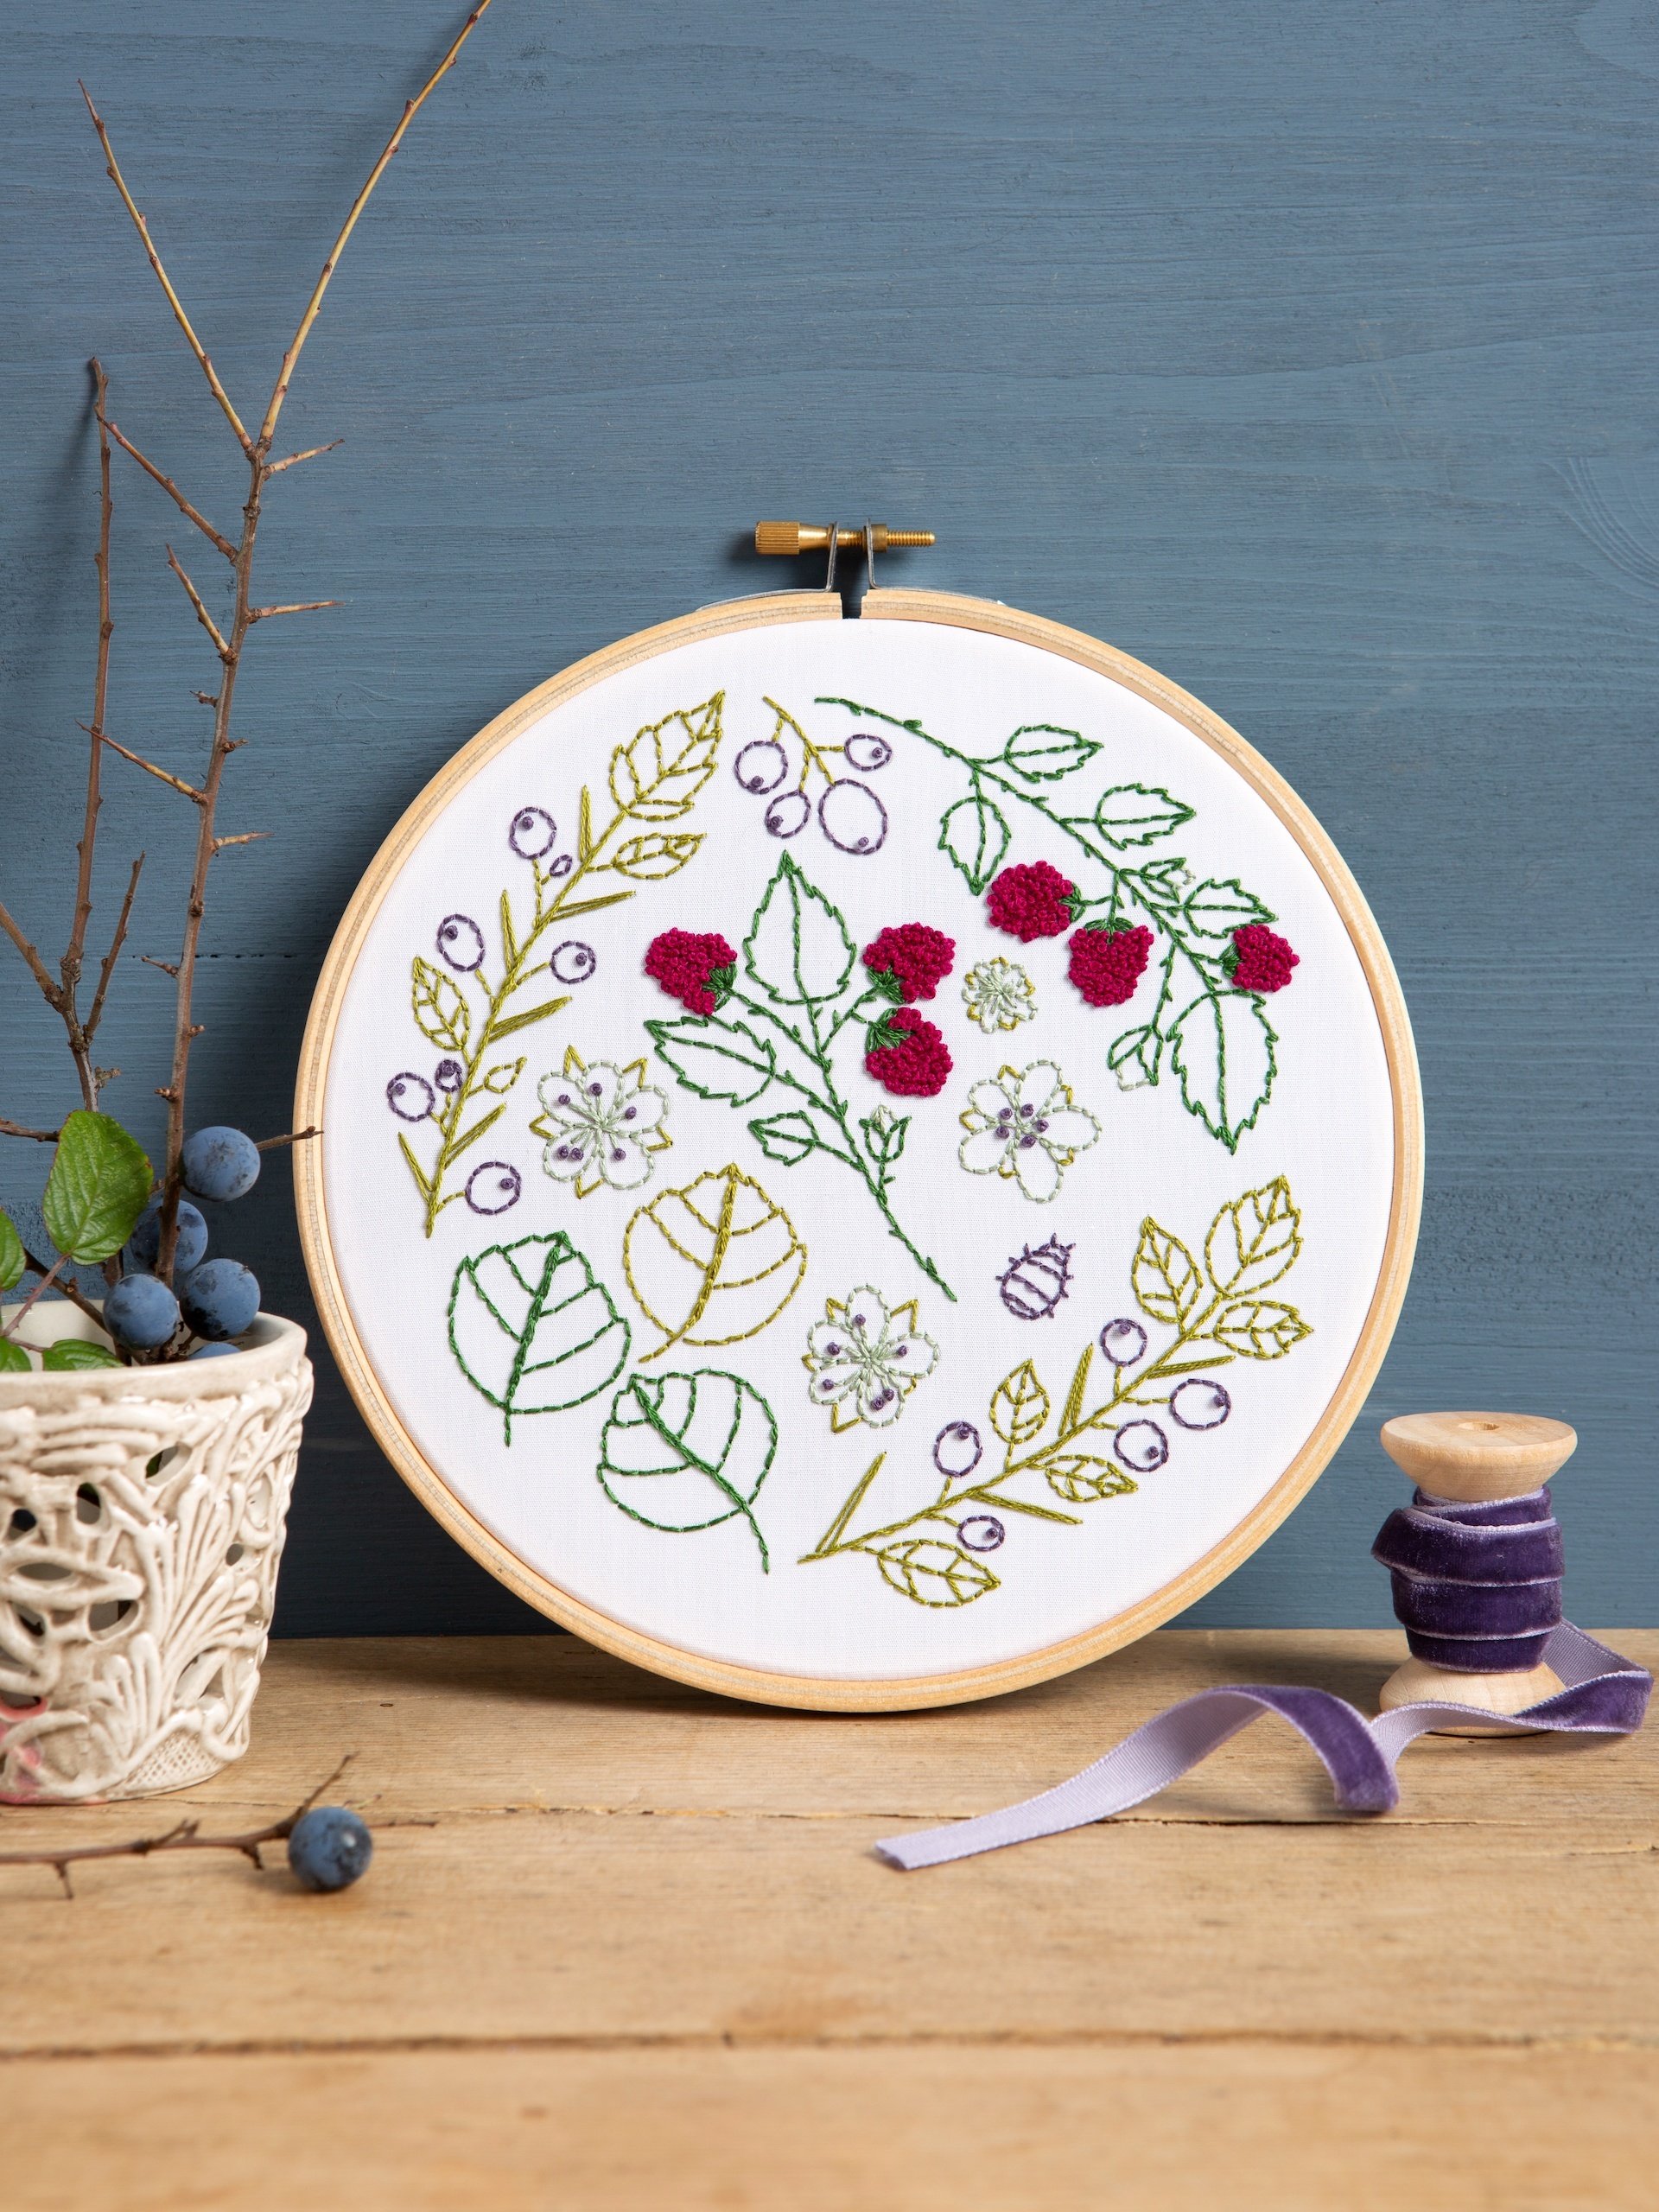 blackthorn-bramble-embroidery-kit-4